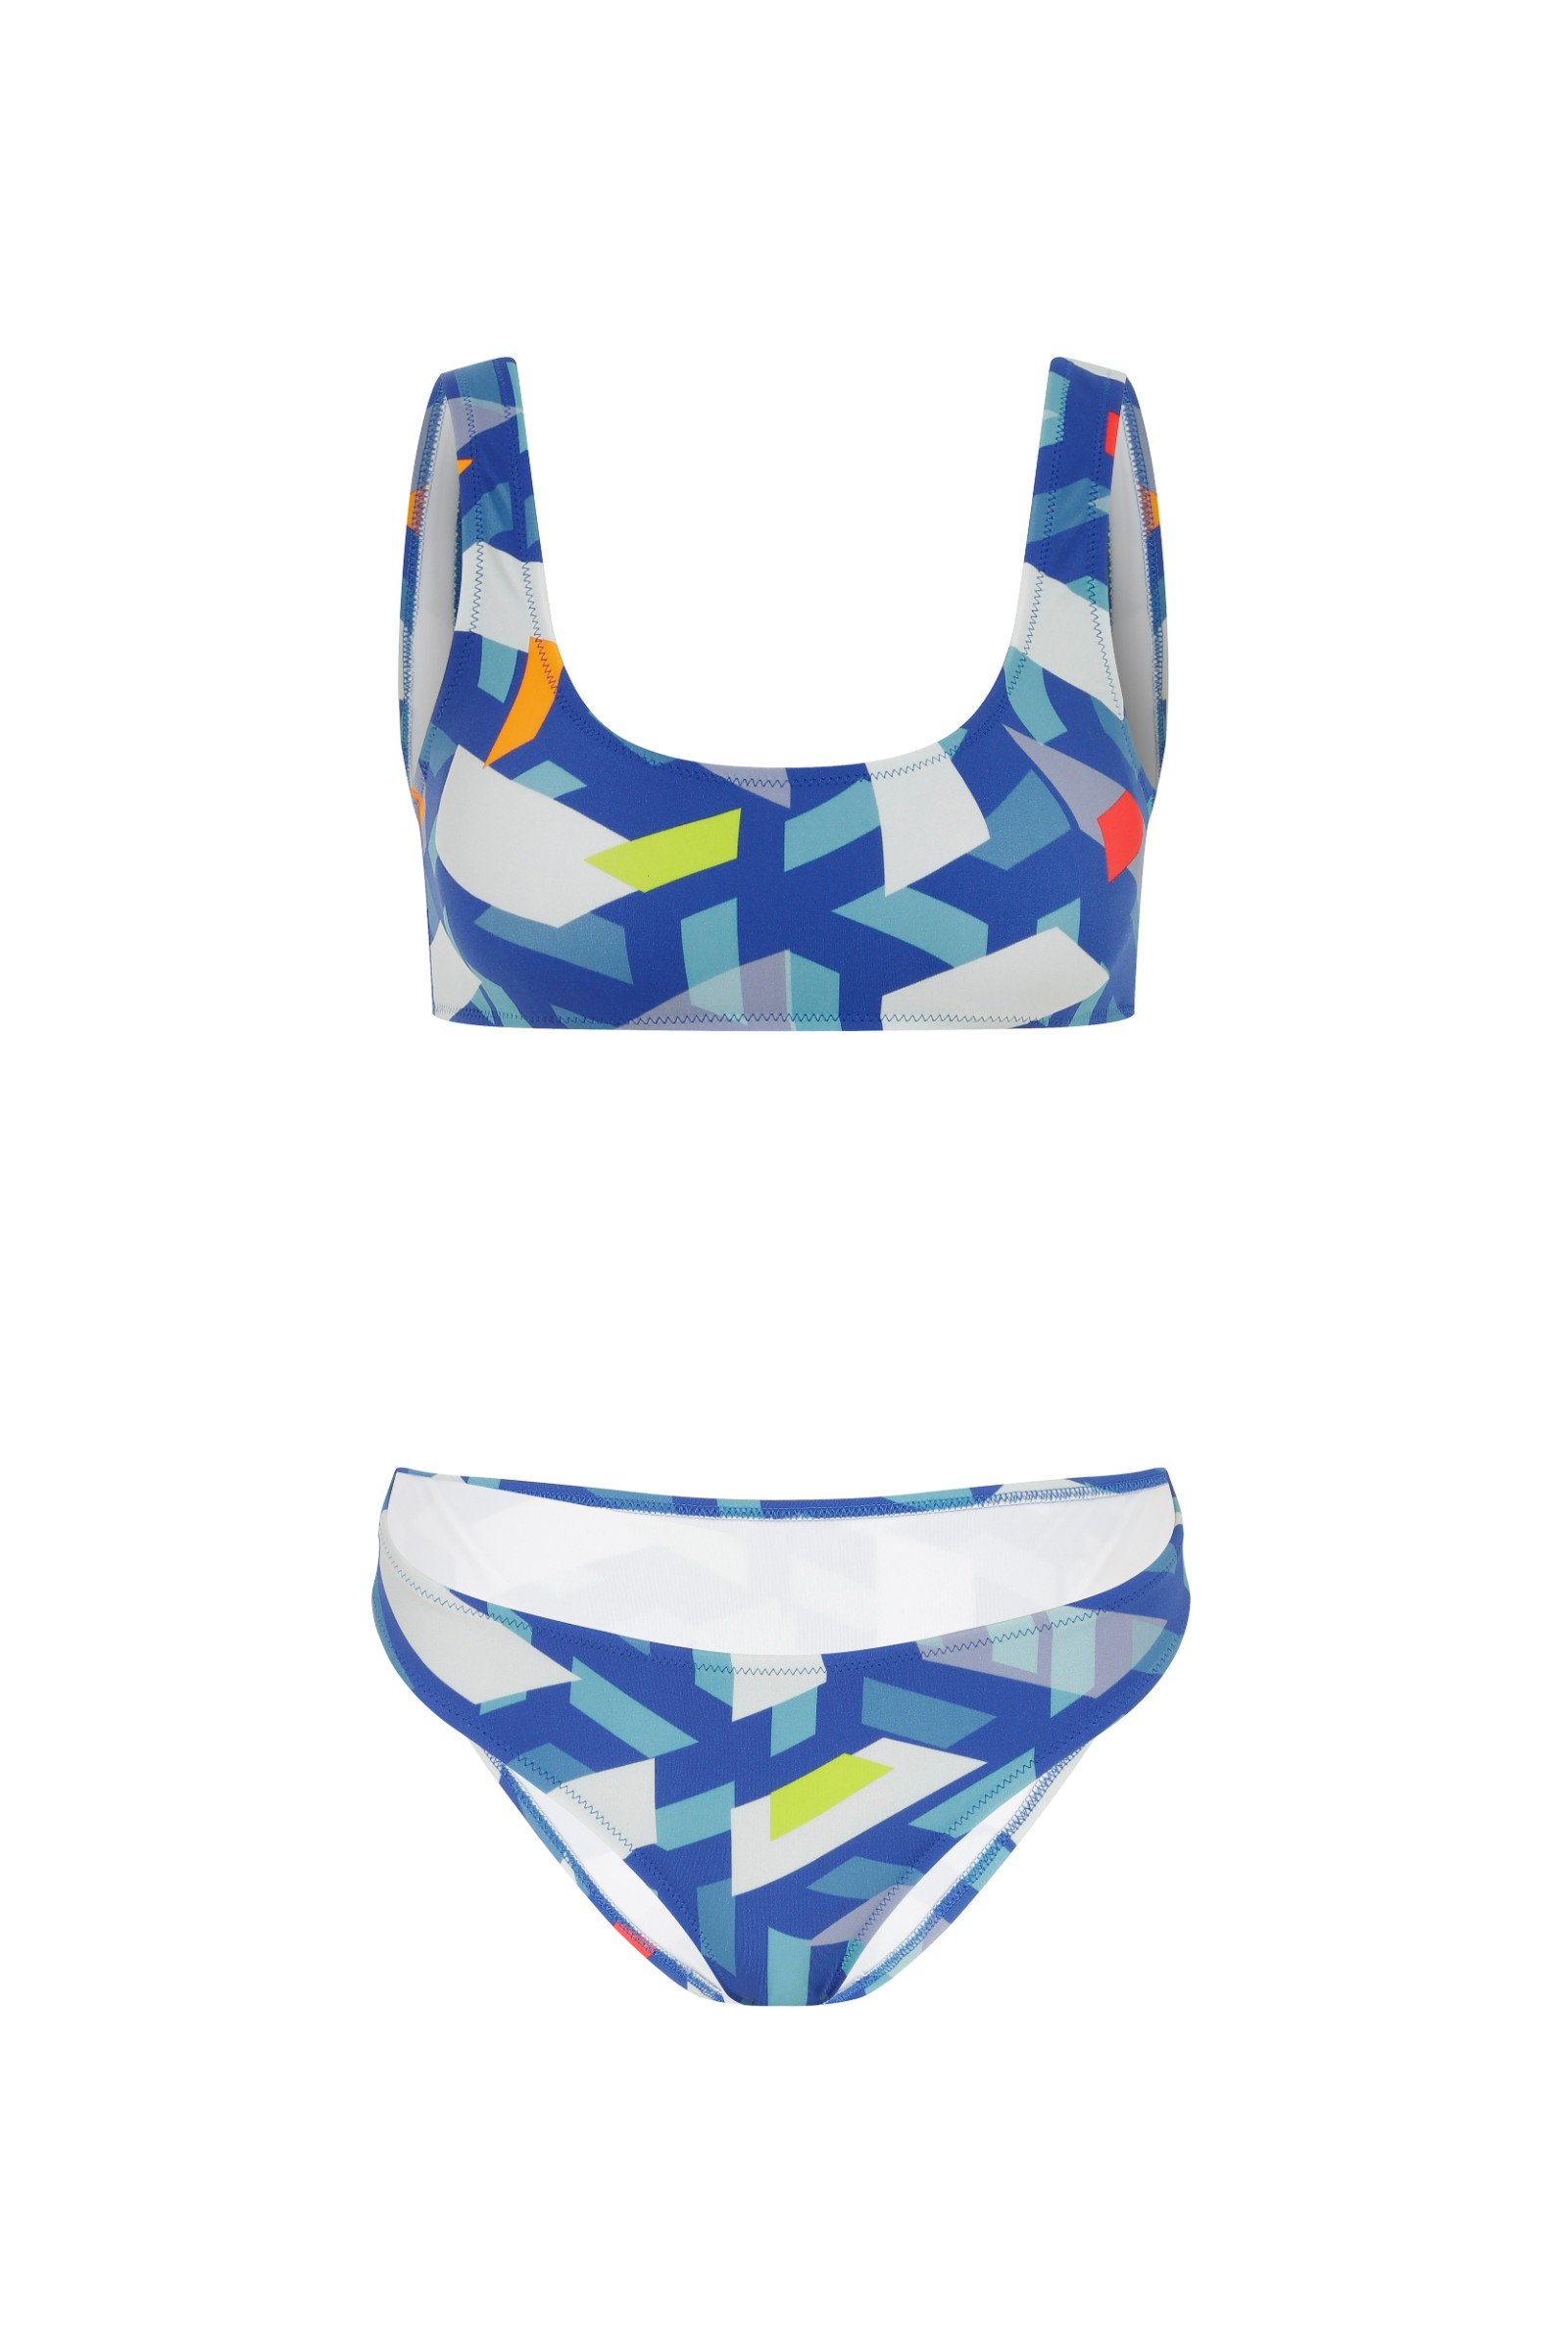 Shelly Graphic Blue Print Bikini 2